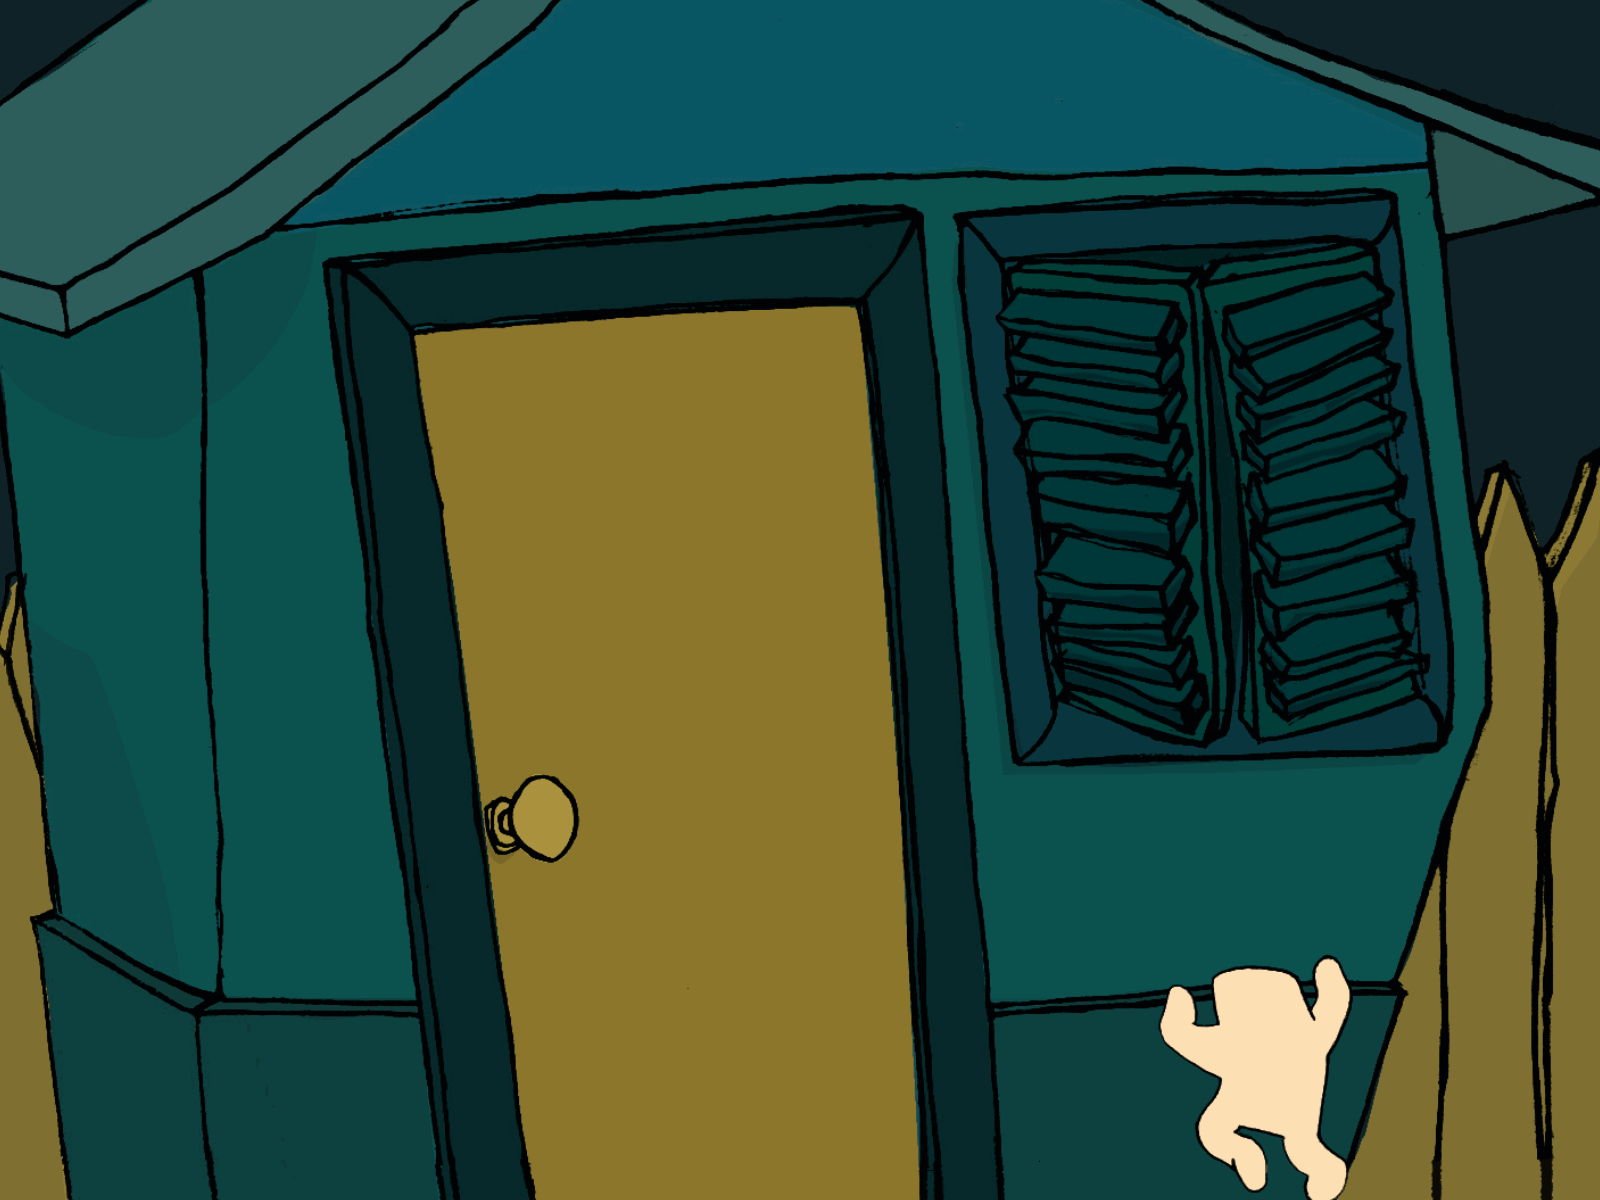 A Knock animation